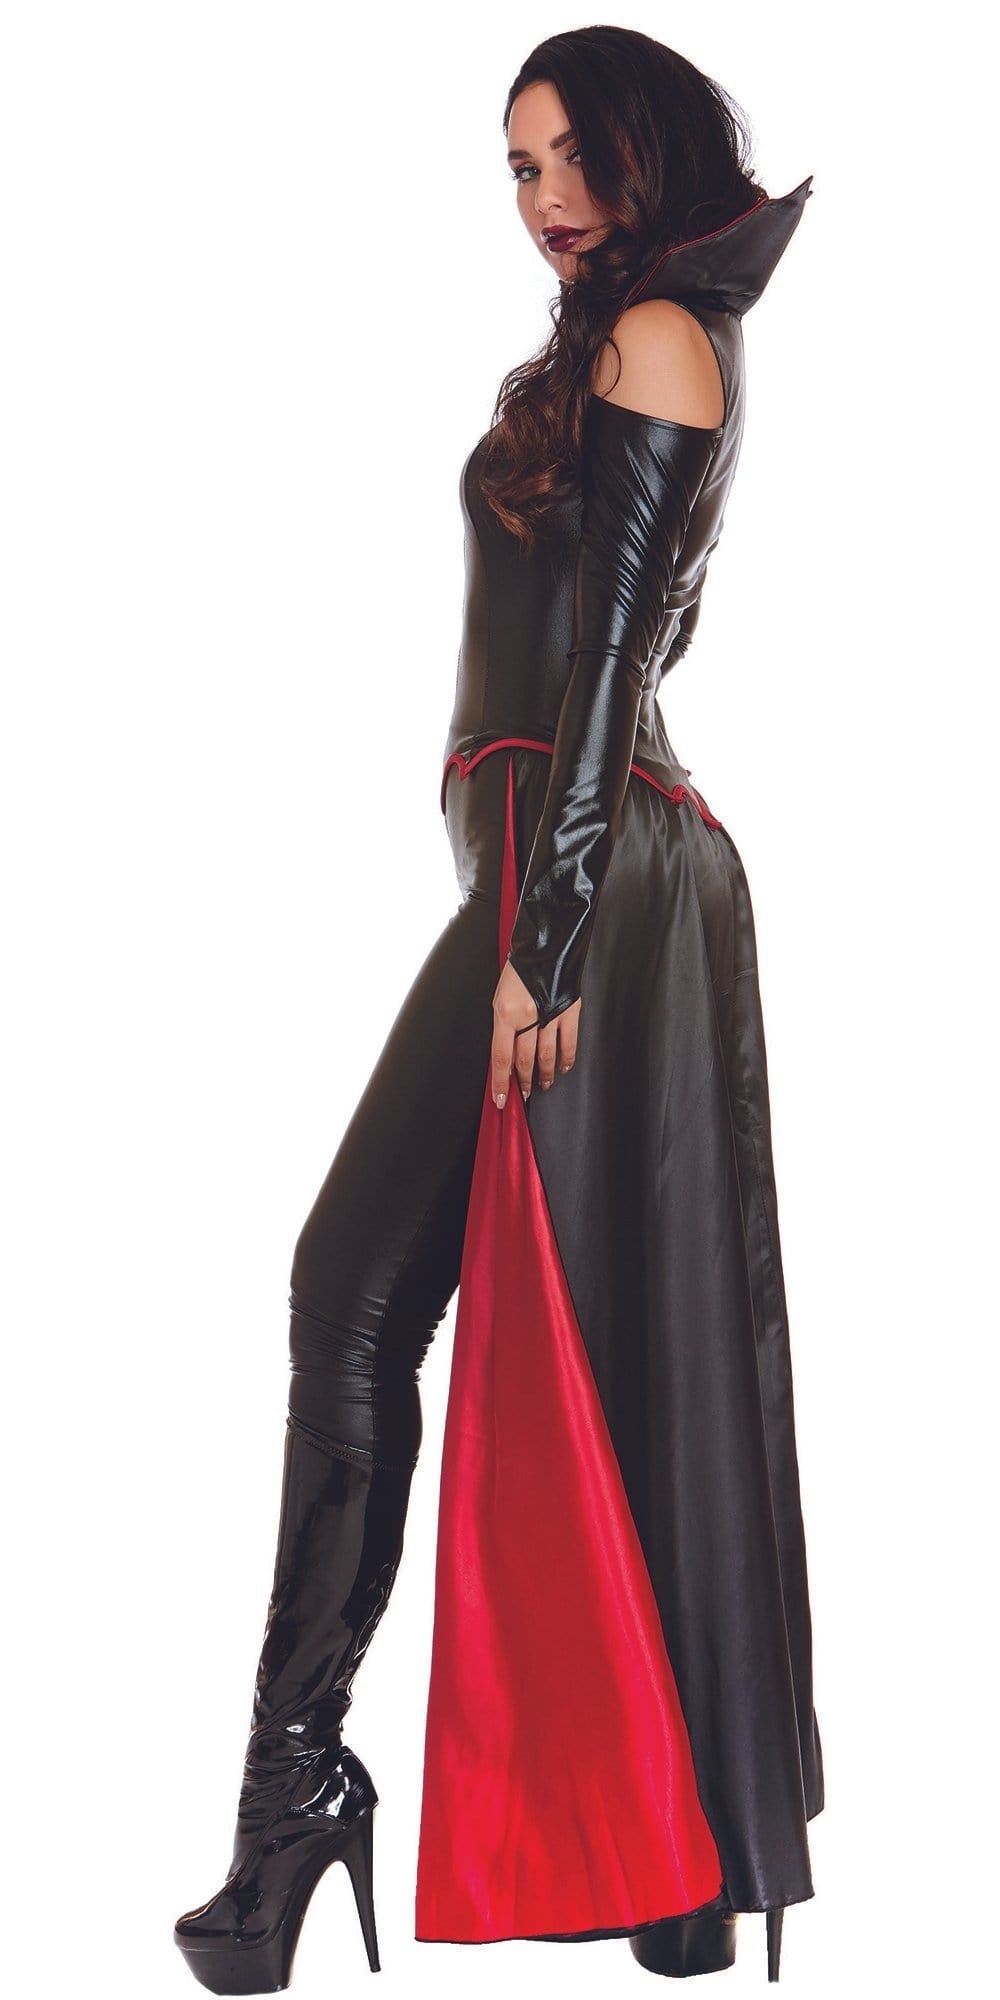 Sexy Princess of Darkness Women's Costume Musotica.com